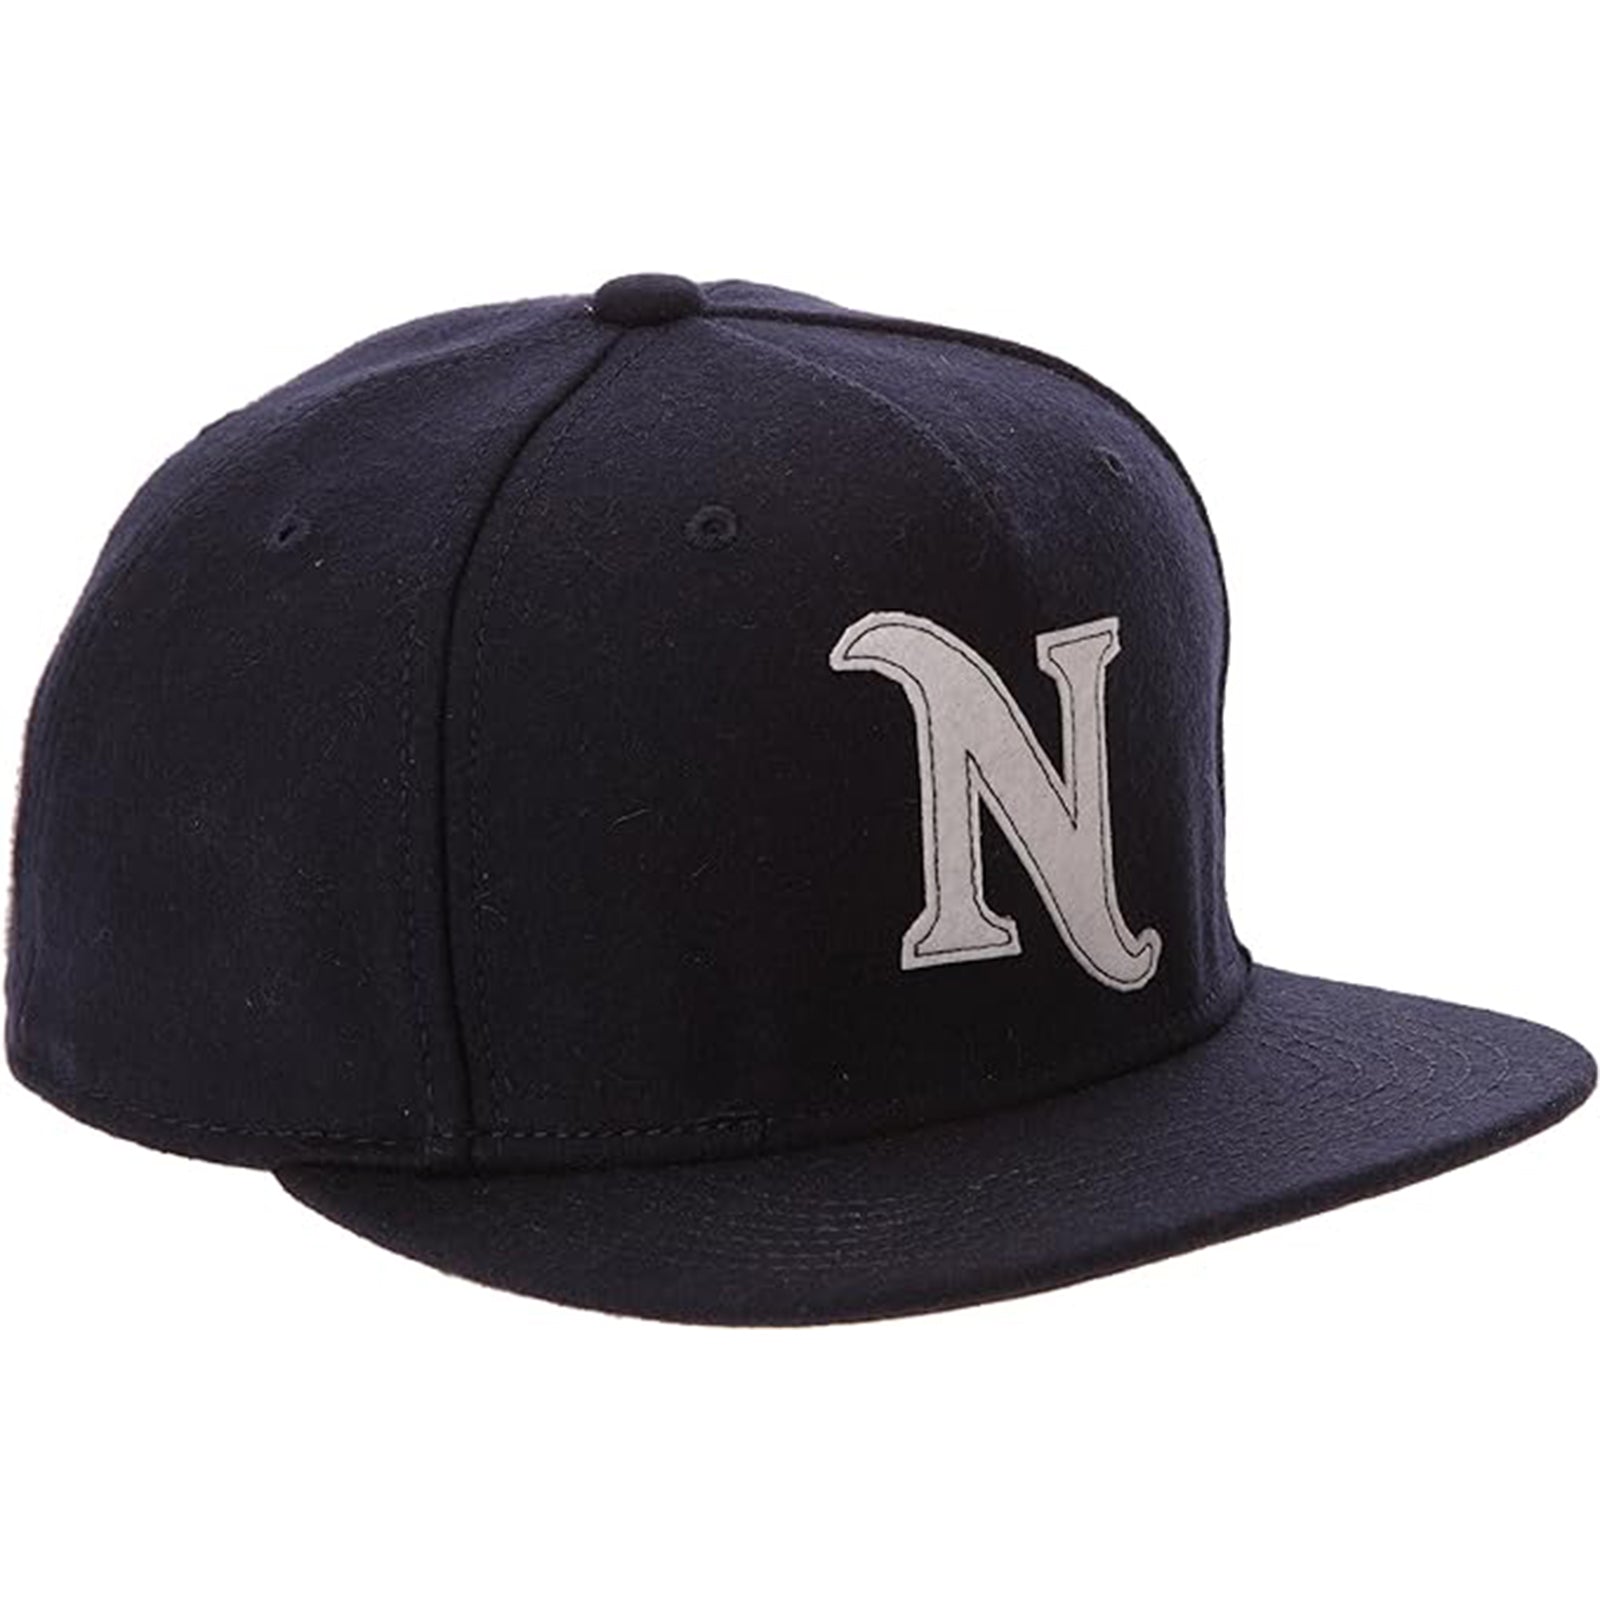 Neff Silas Baxter-Neal Pro Men's Snapback Adjustable Hats-SS14038